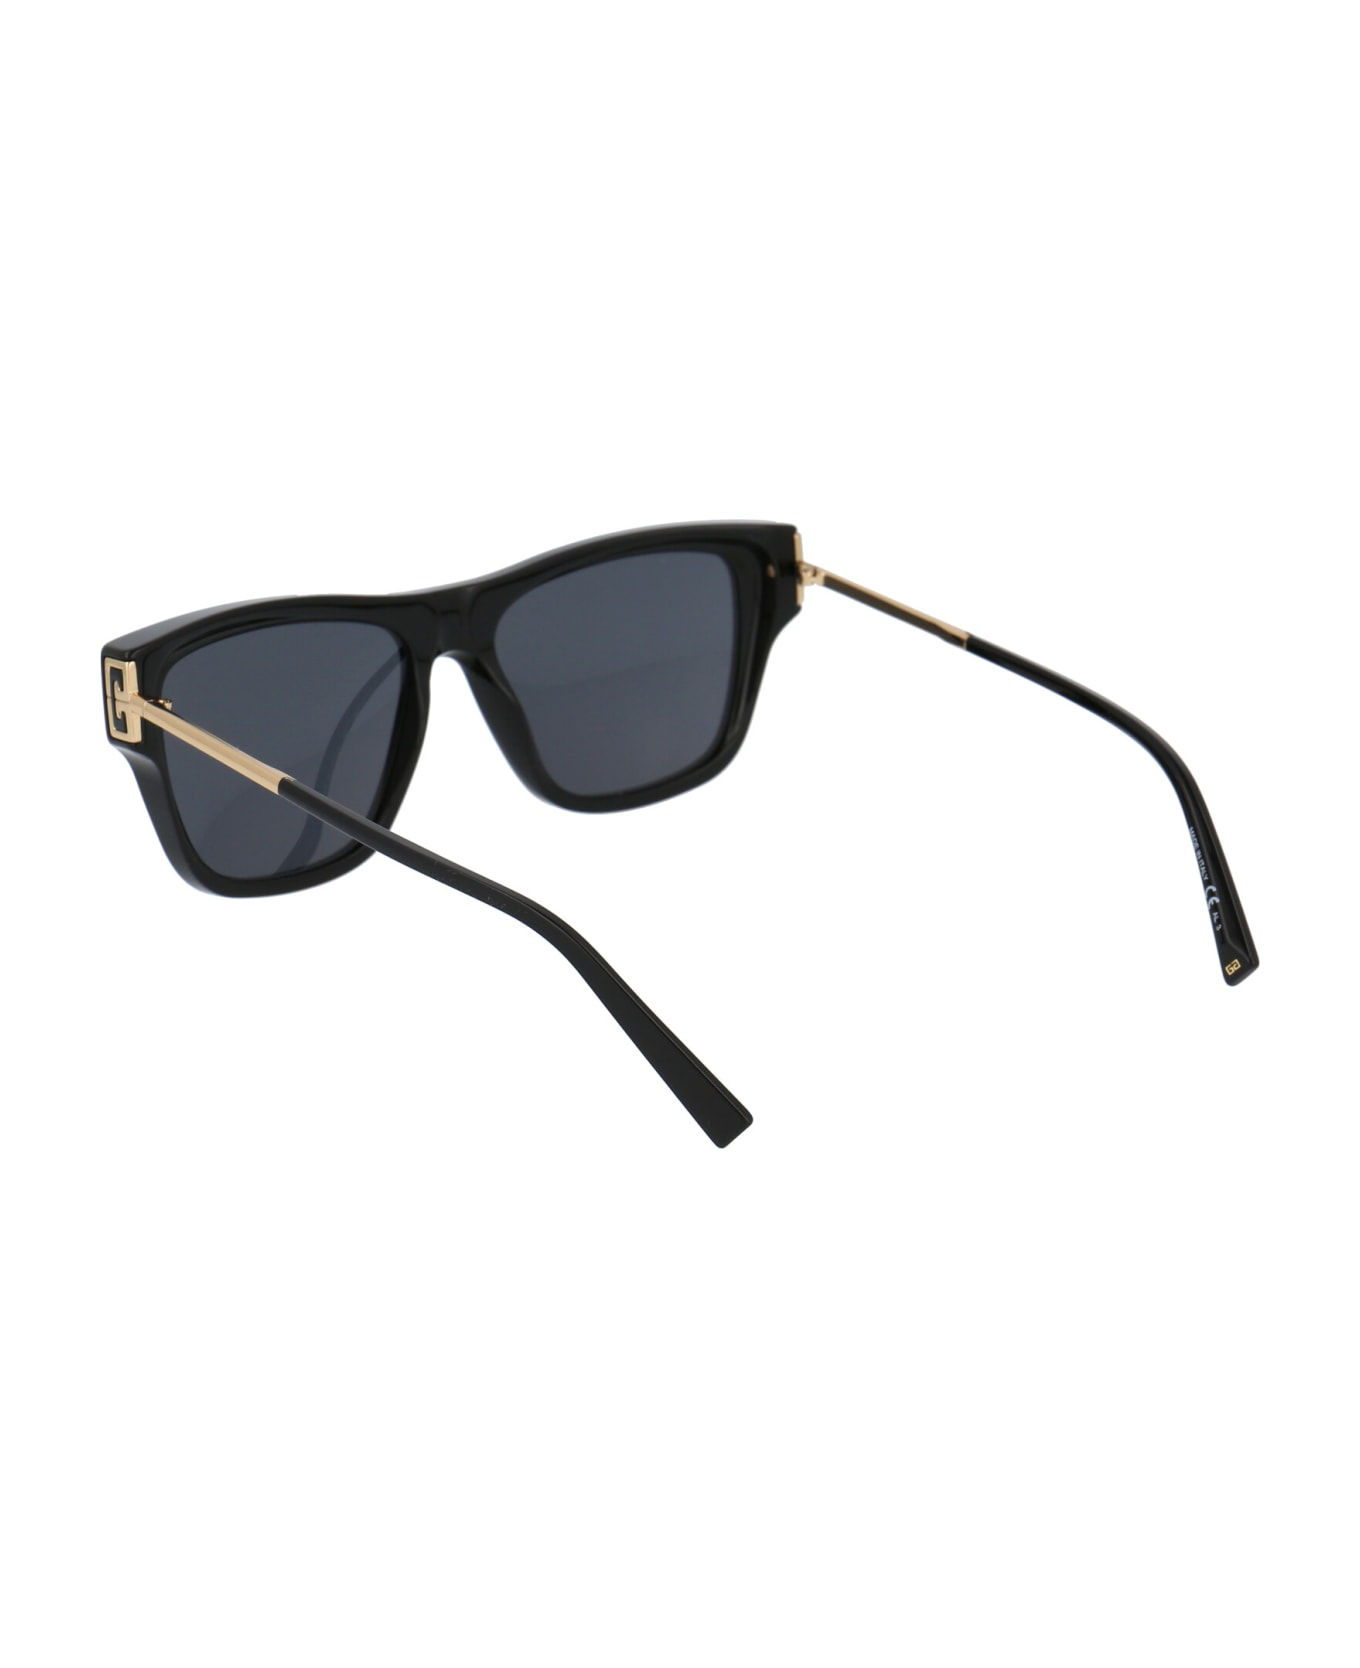 Givenchy Eyewear Gv 7190/s Sunglasses - 807IR BLACK